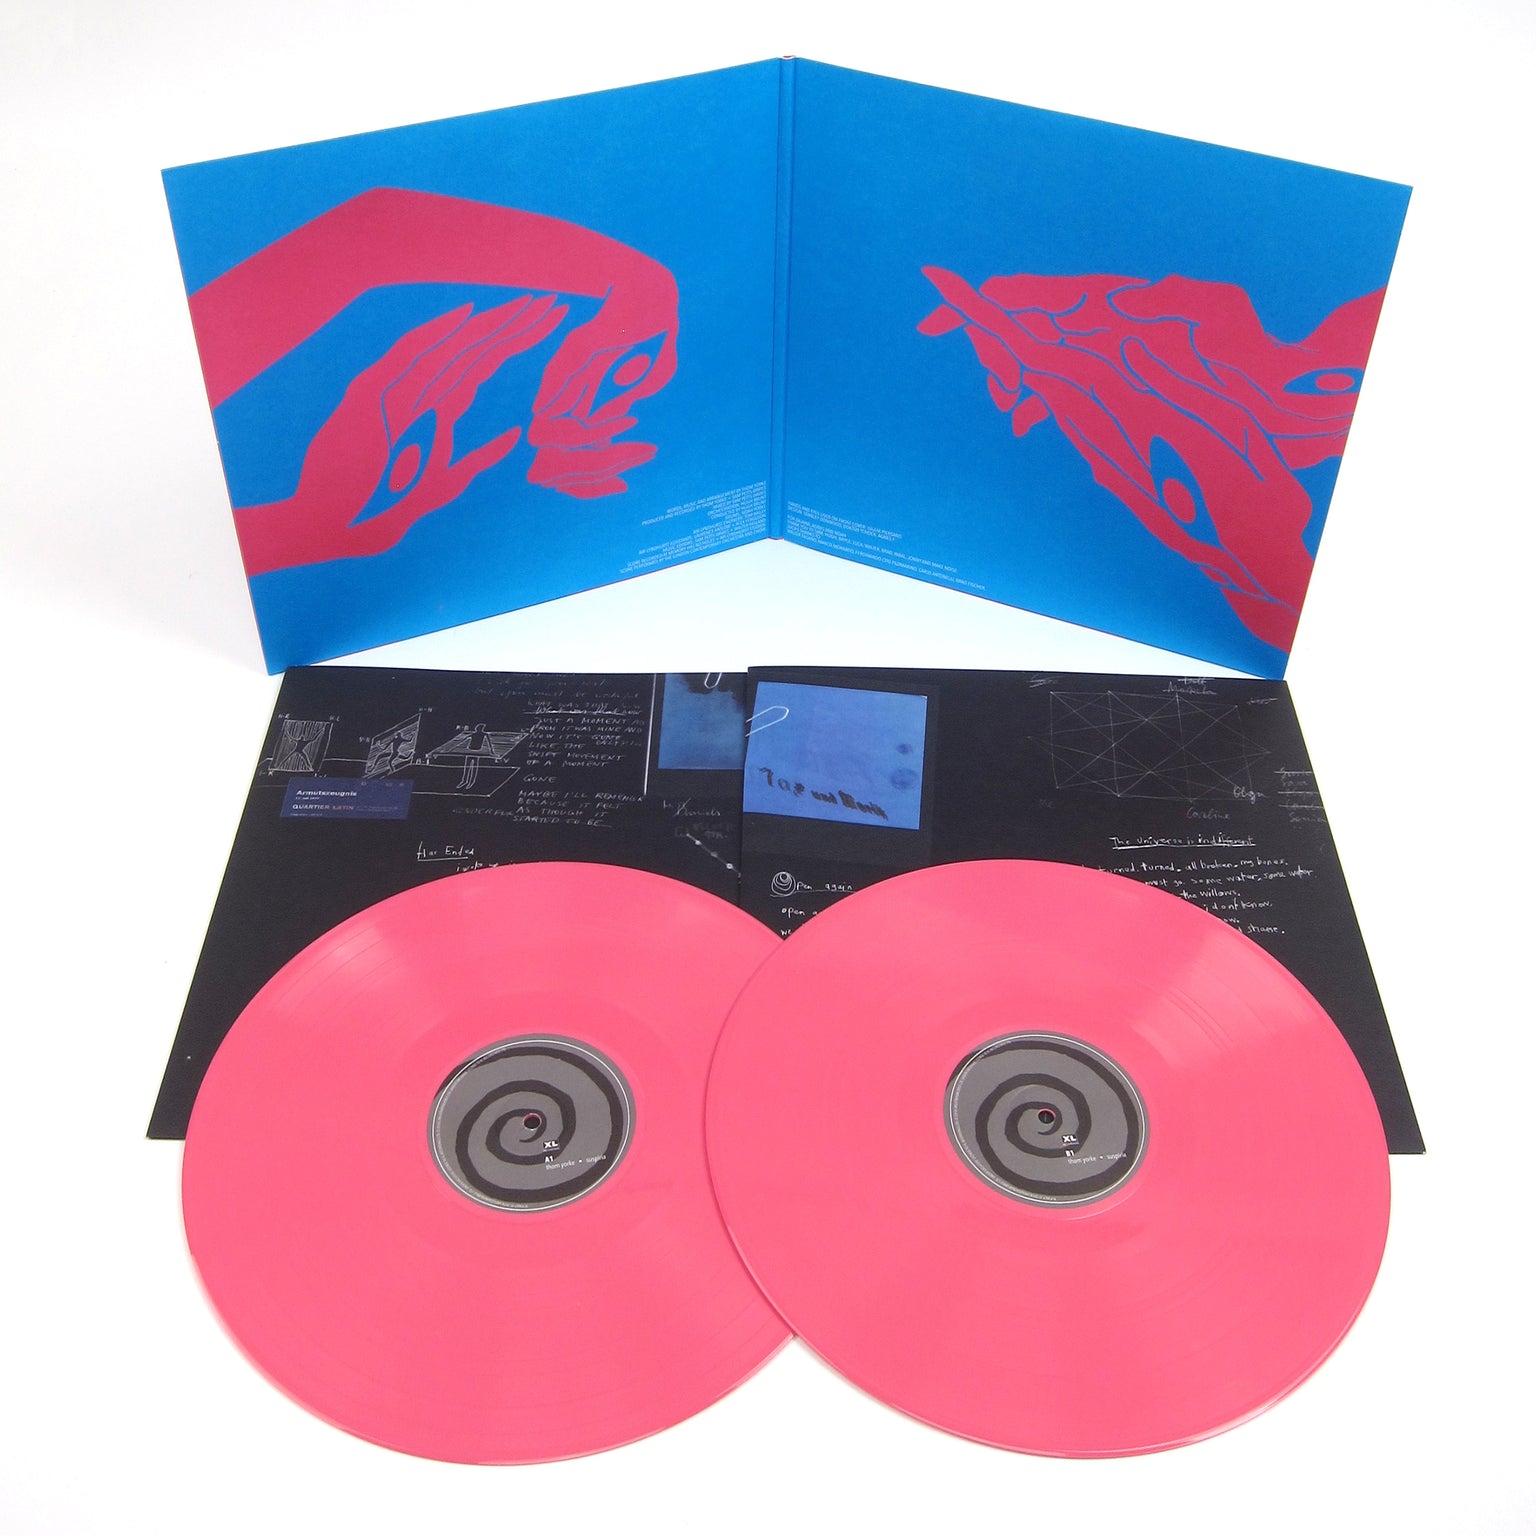 Саундтрек винил. Yorke Thom "Suspiria". Thom Yorke Suspiria винил. Цветные пластинки. Pink Vinyl.